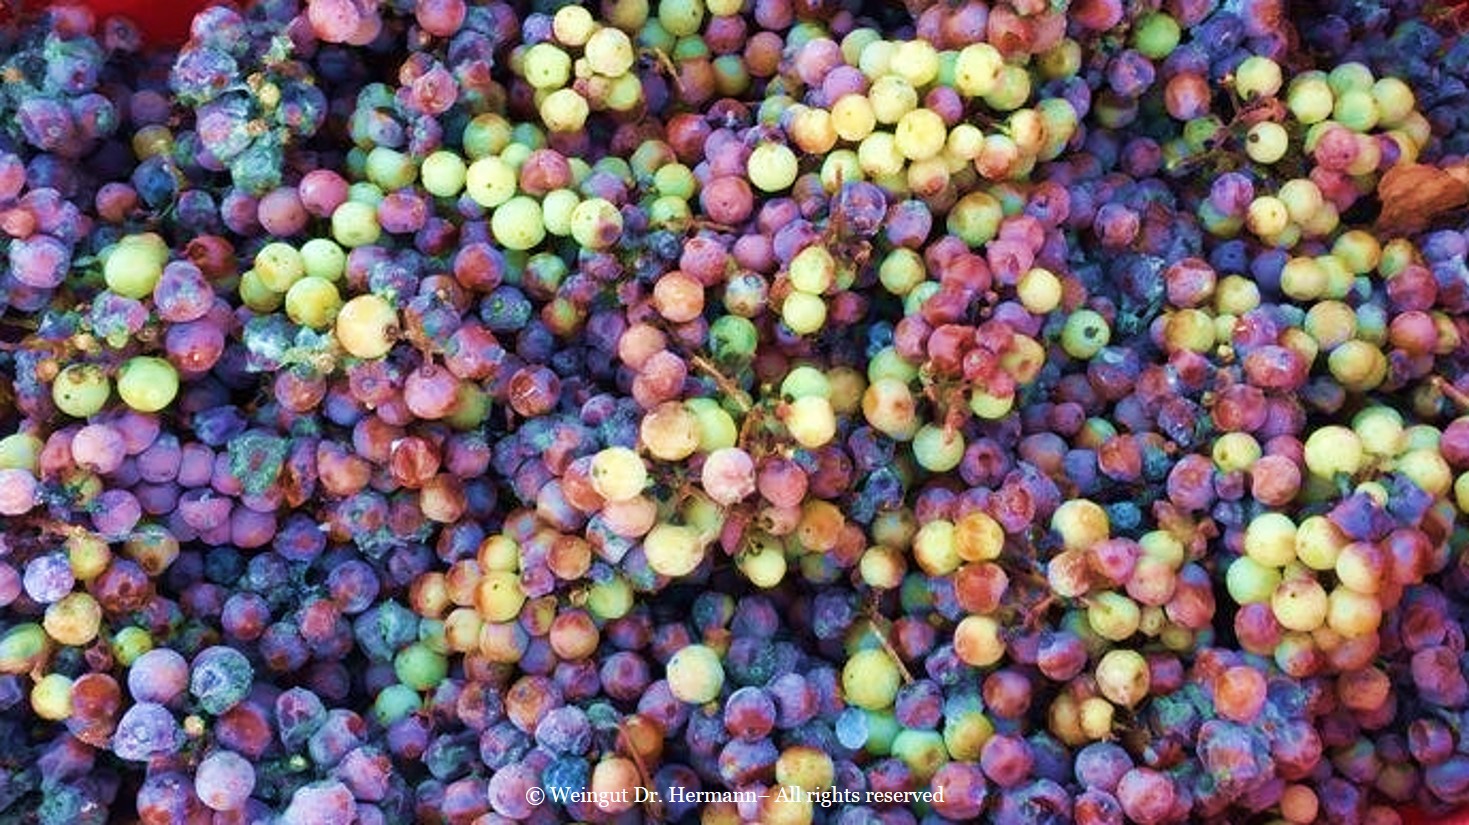 Eiswein Grapes - Harvest 2015 - Weingut Dr. Hermann